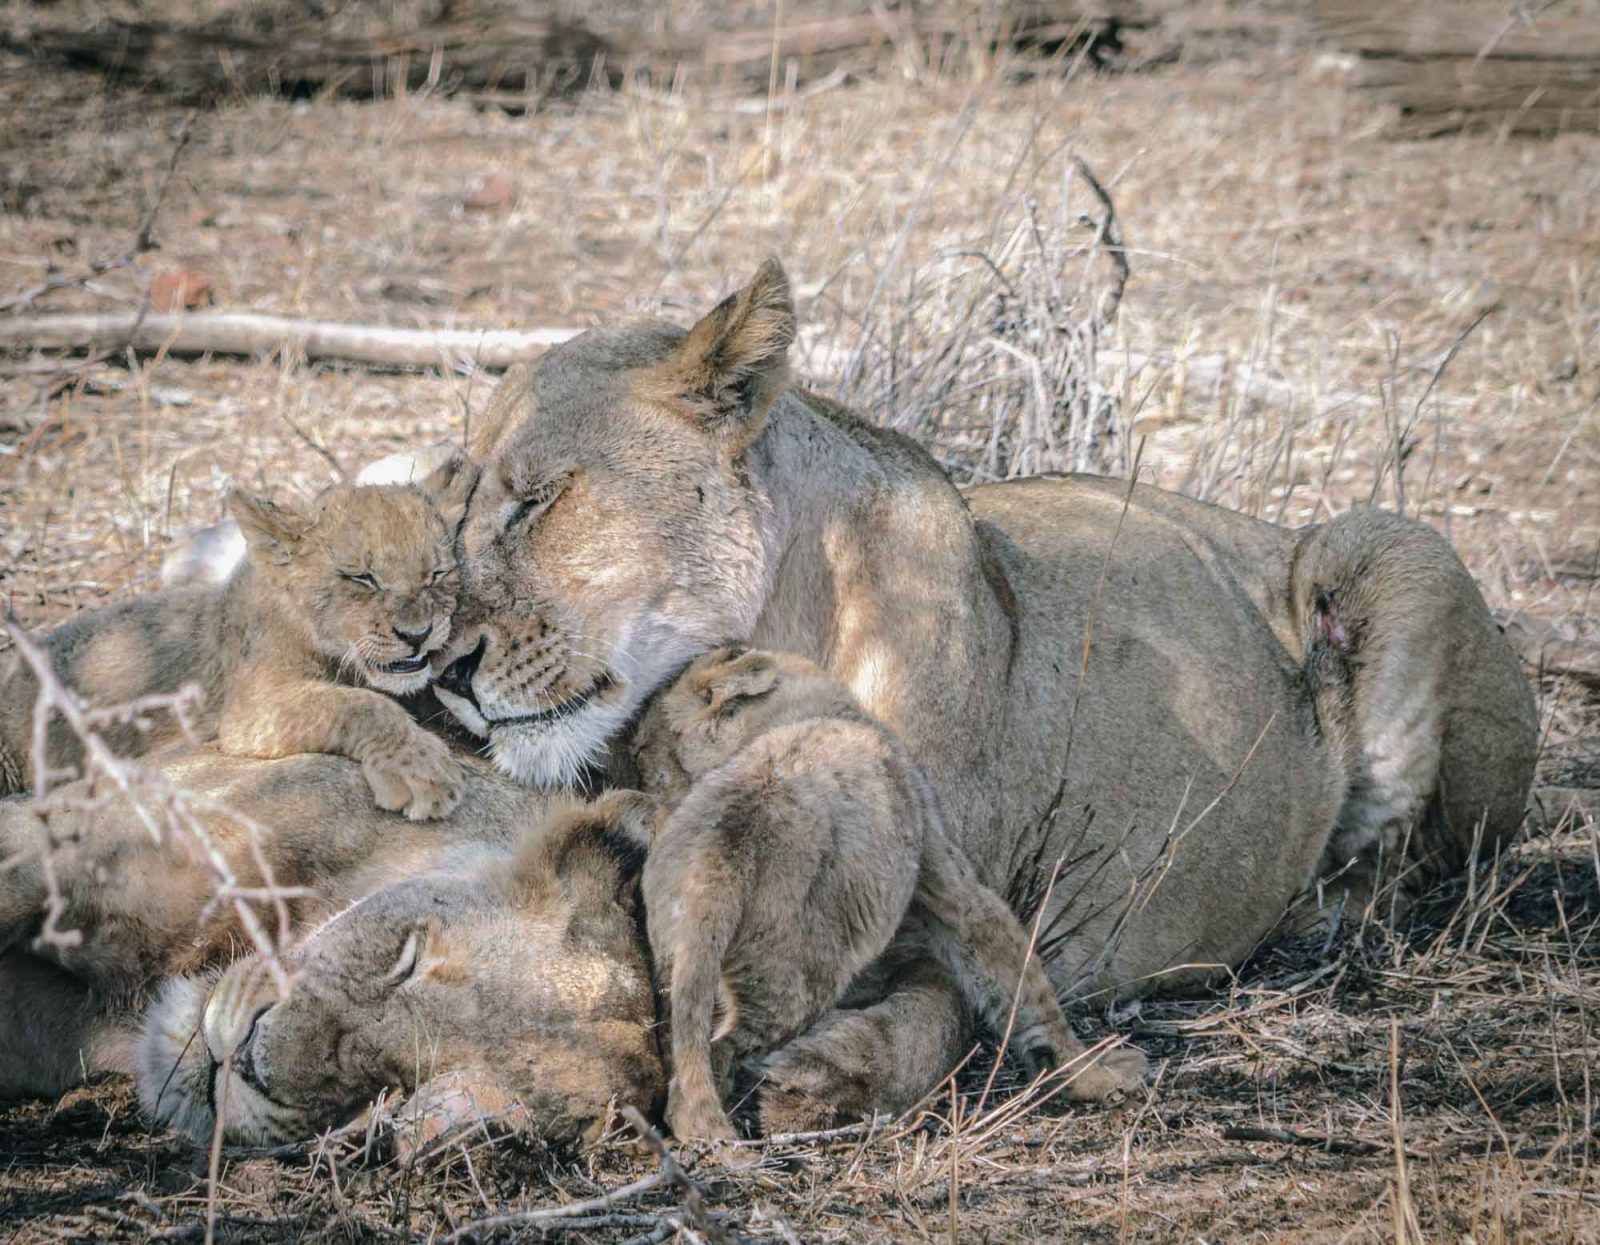 South Africa Kruger Singita safari lions 02956